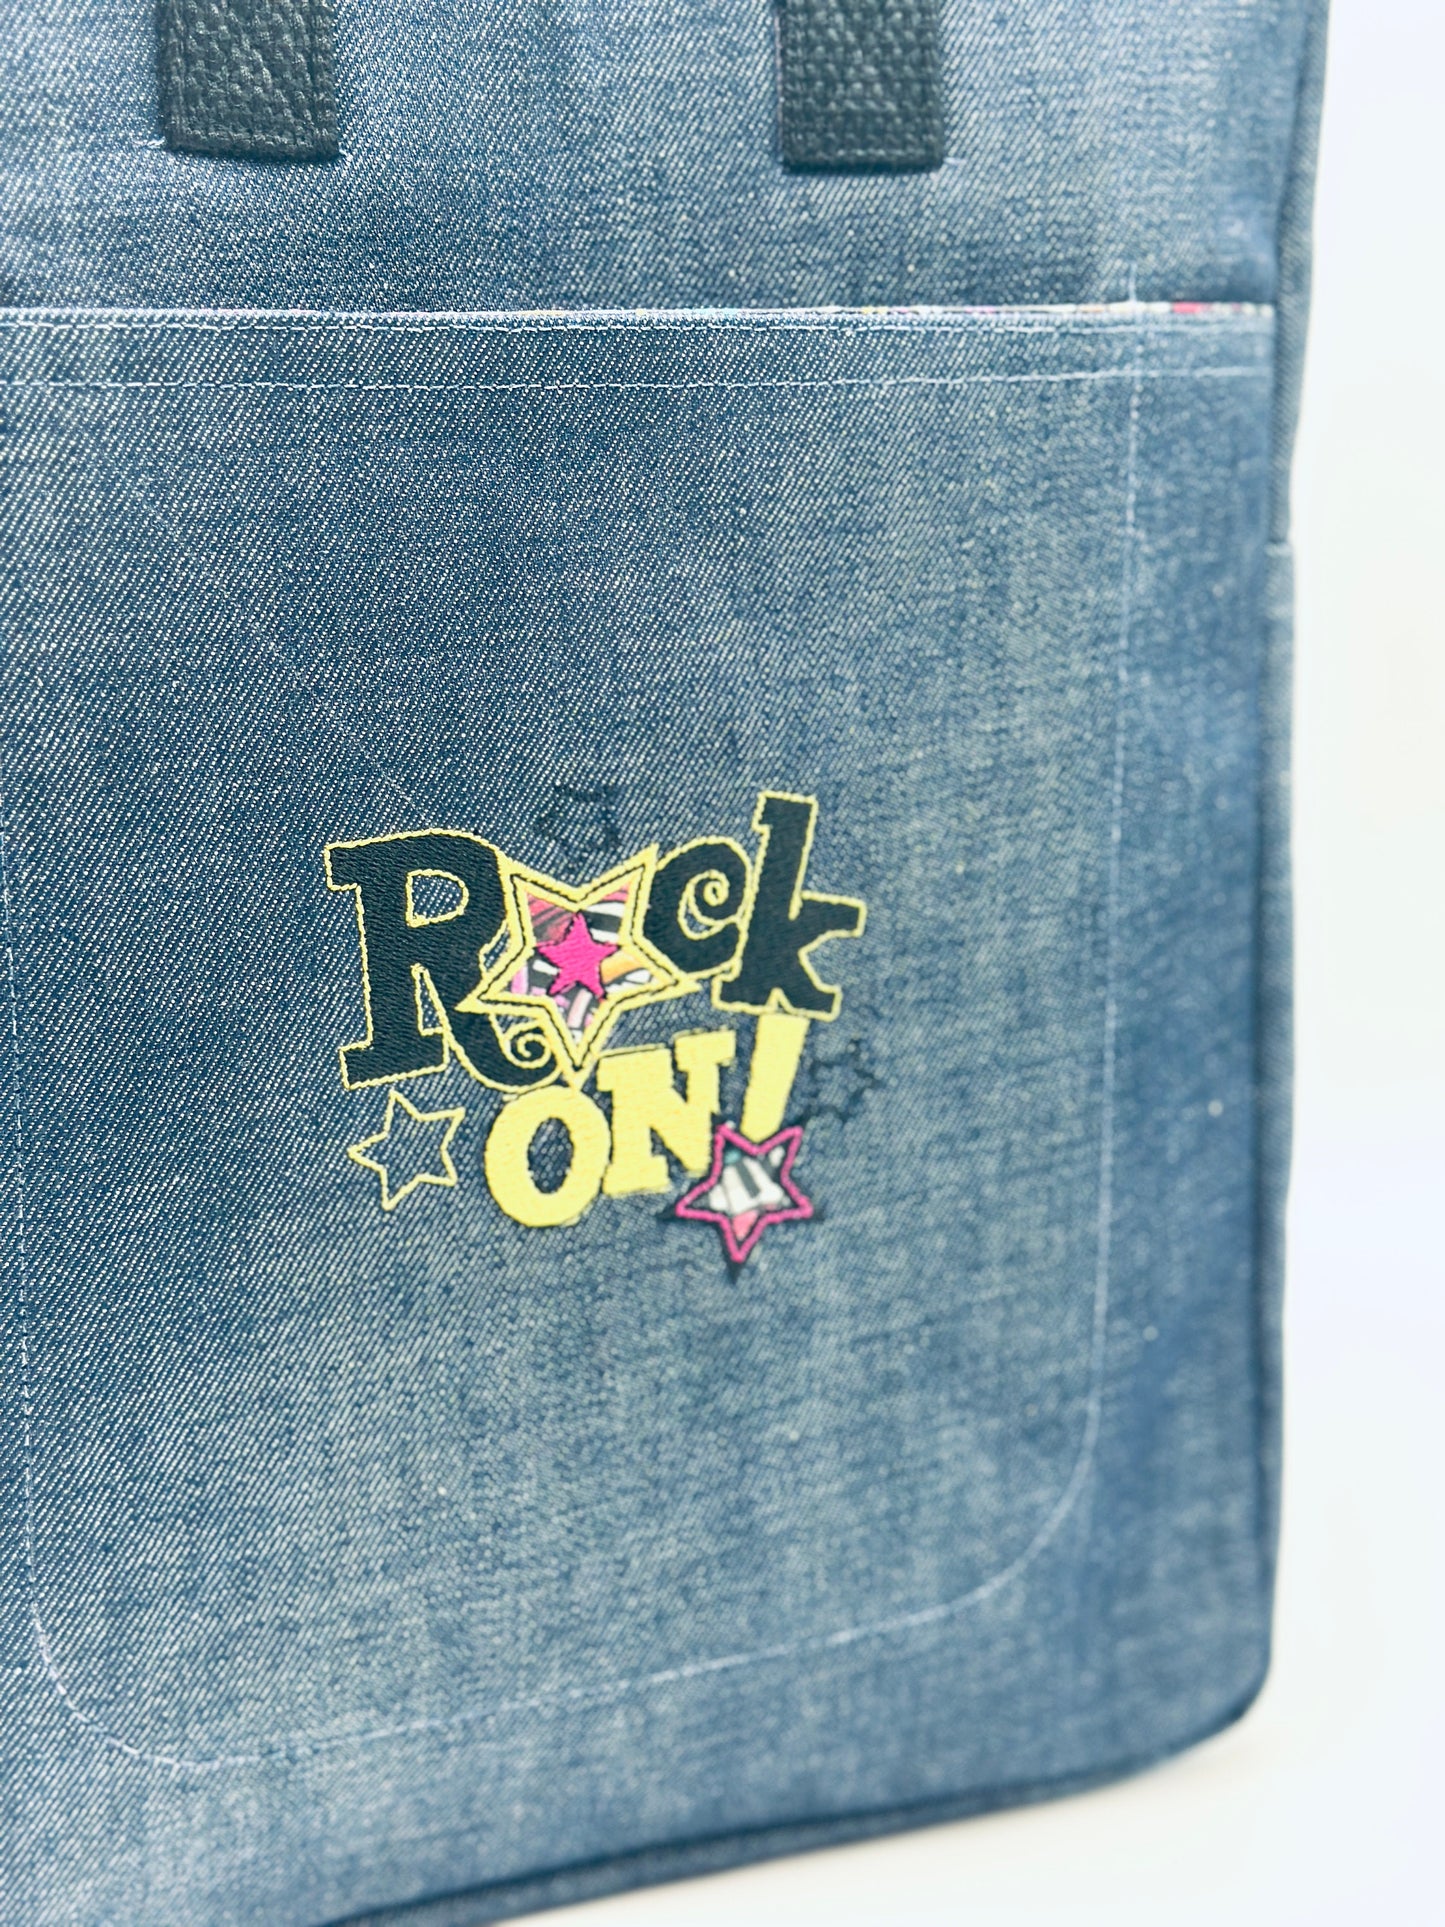 Backpack - Rockstar Edition